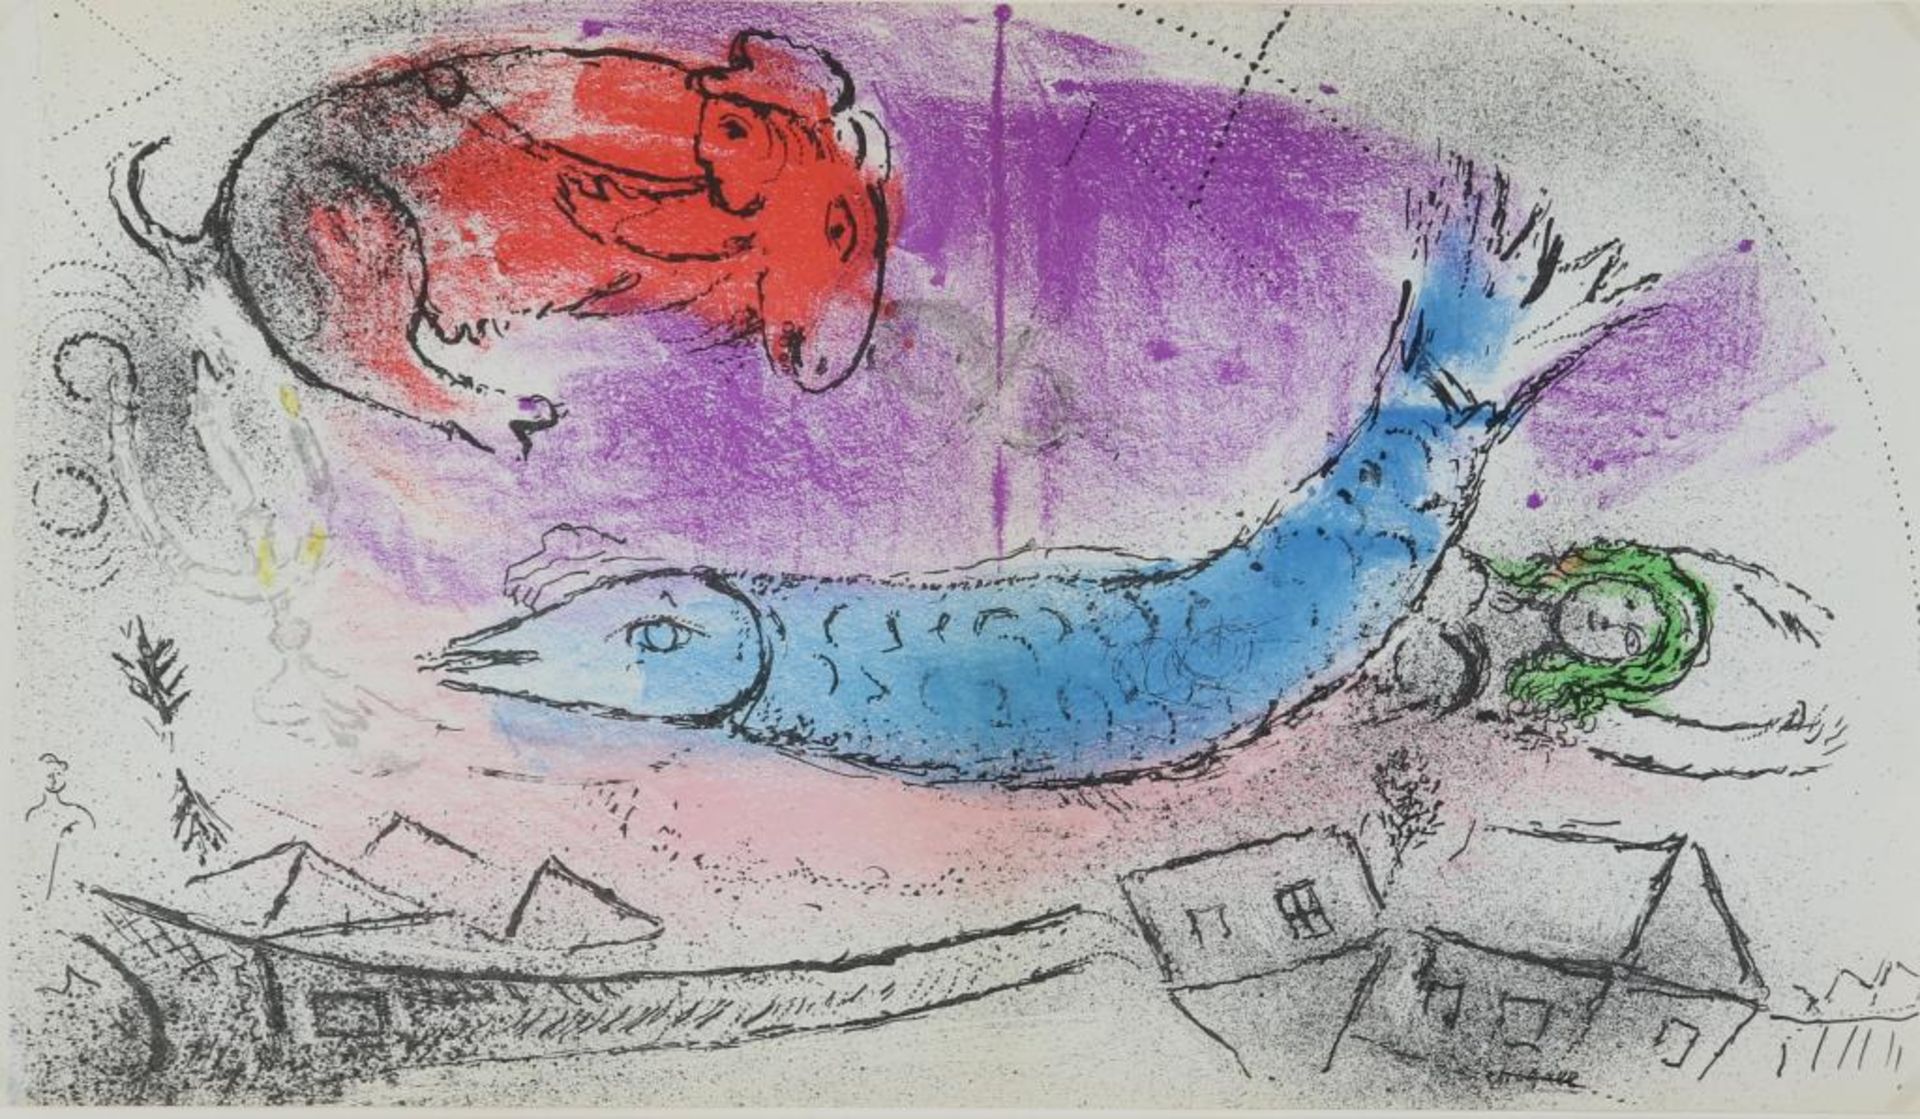 Chagall, Marc. Lassaigne, litho